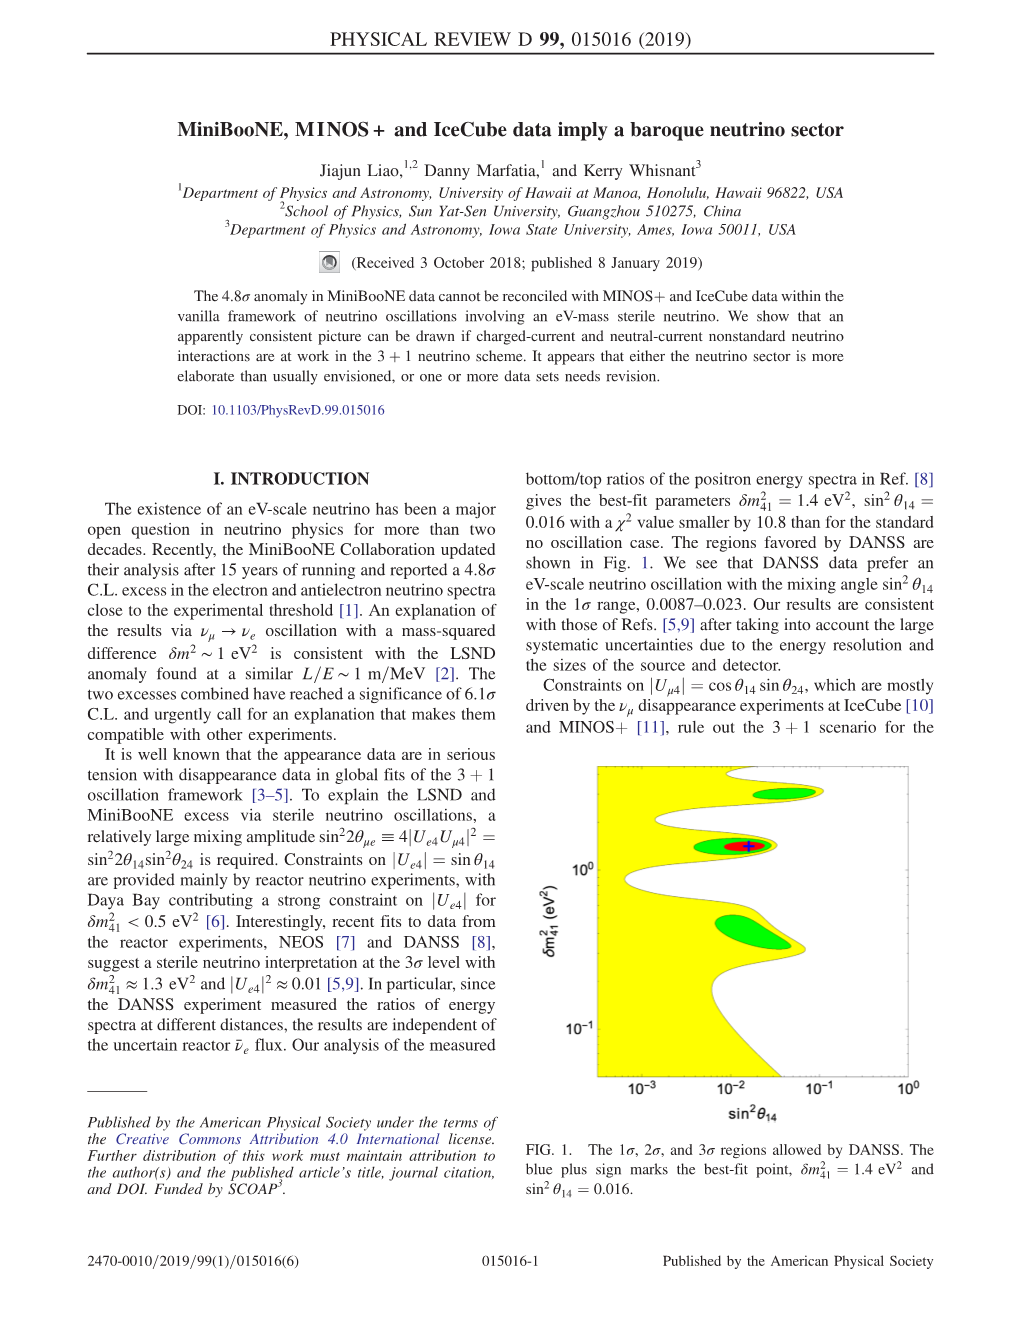 Miniboone, MINOS+ and Icecube Data Imply a Baroque Neutrino Sector